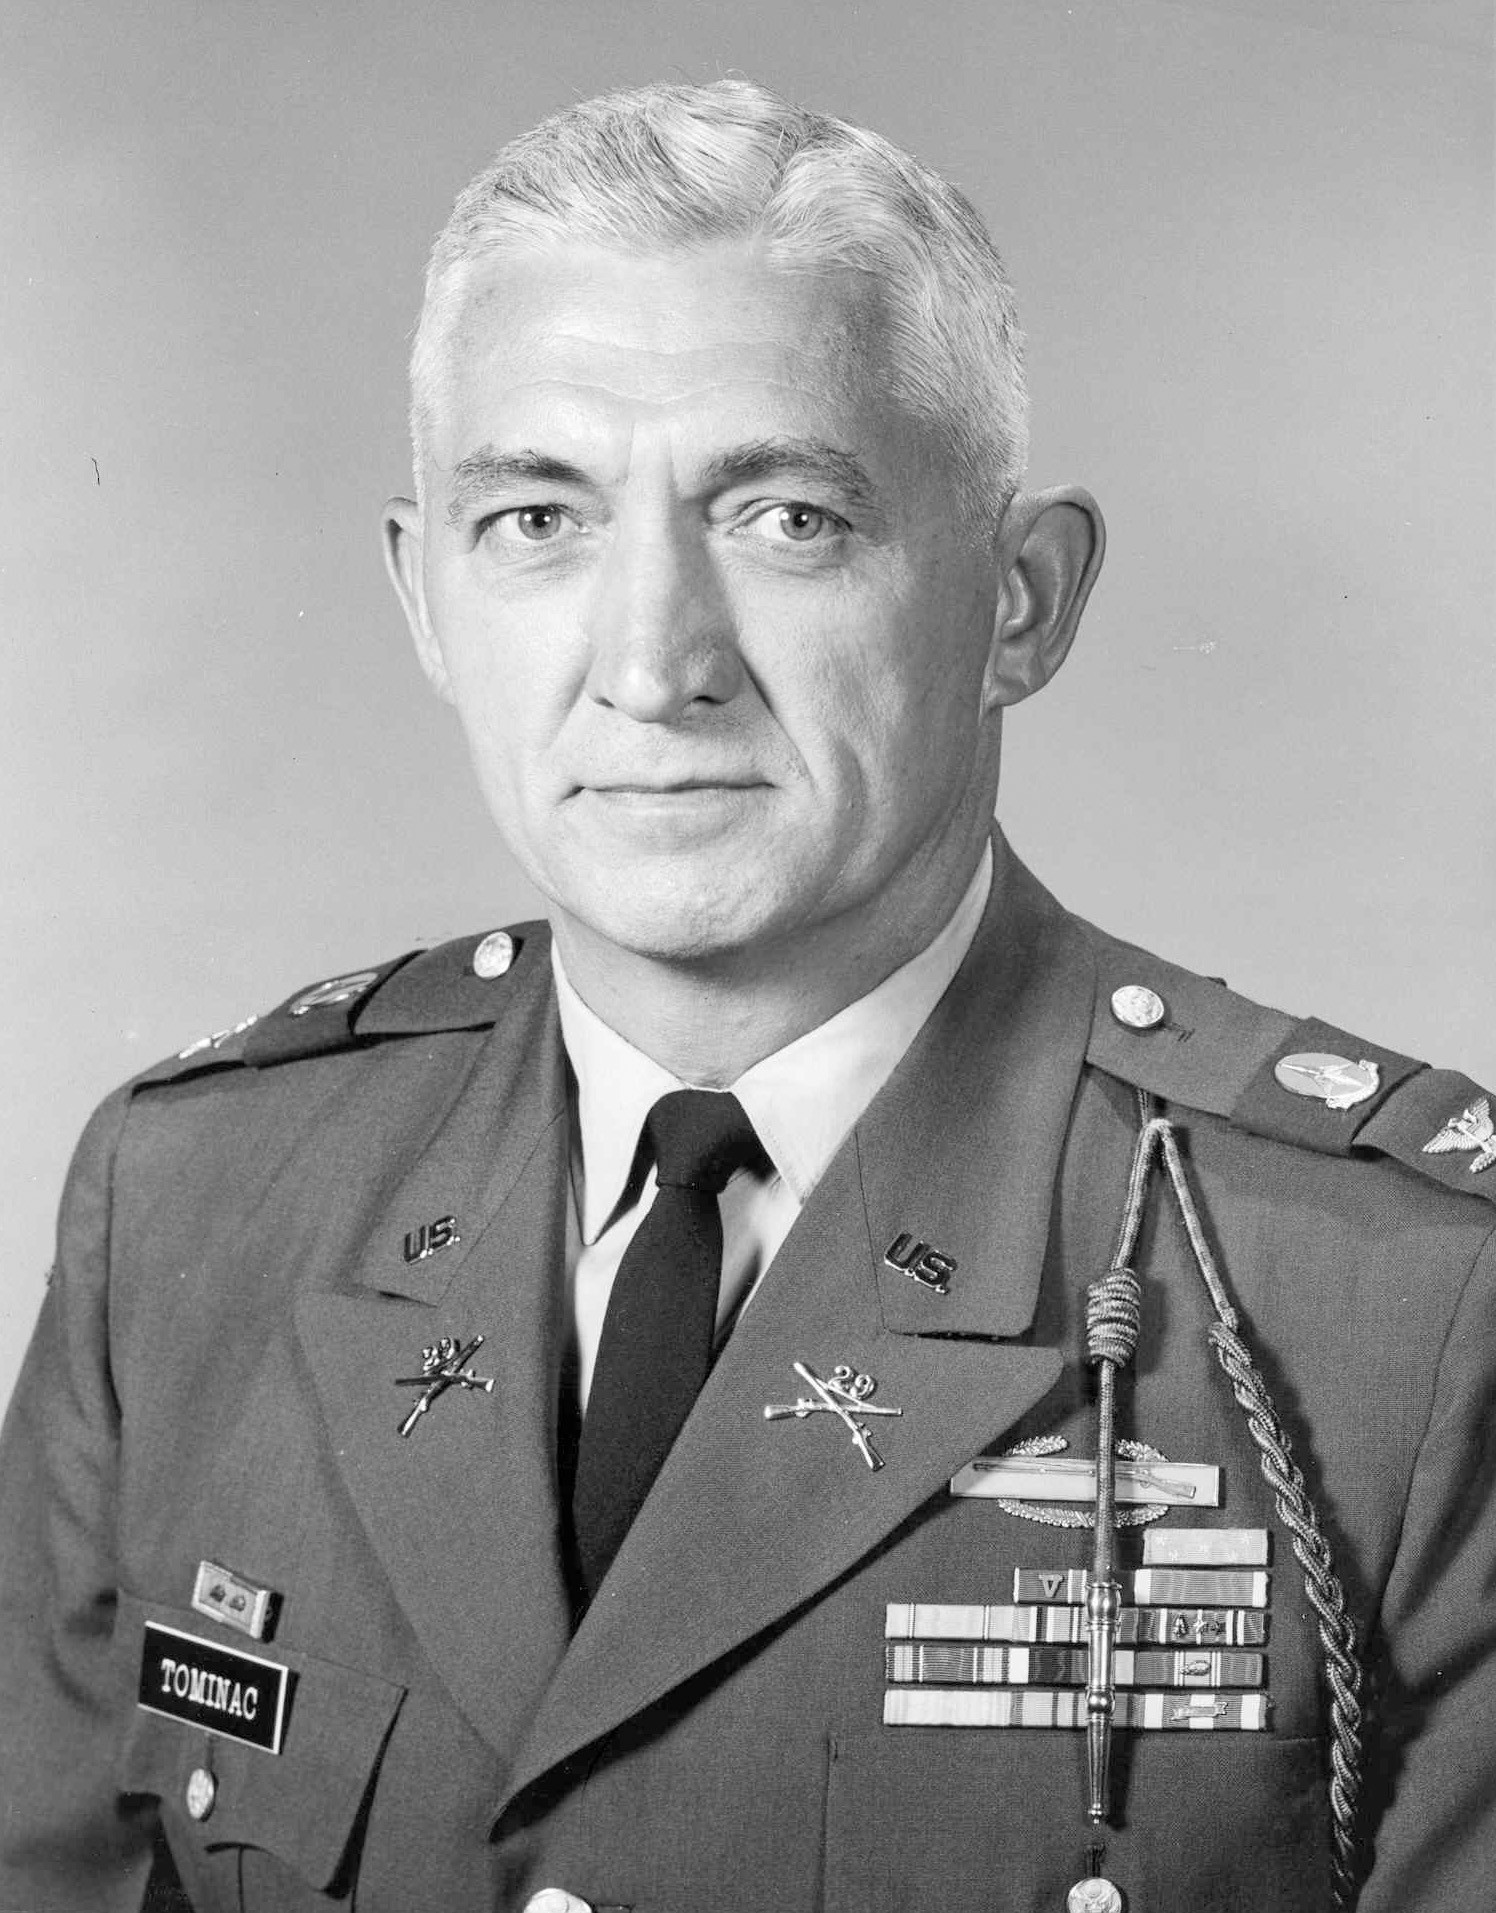 Medal of Honor Recipient John J. Tominac